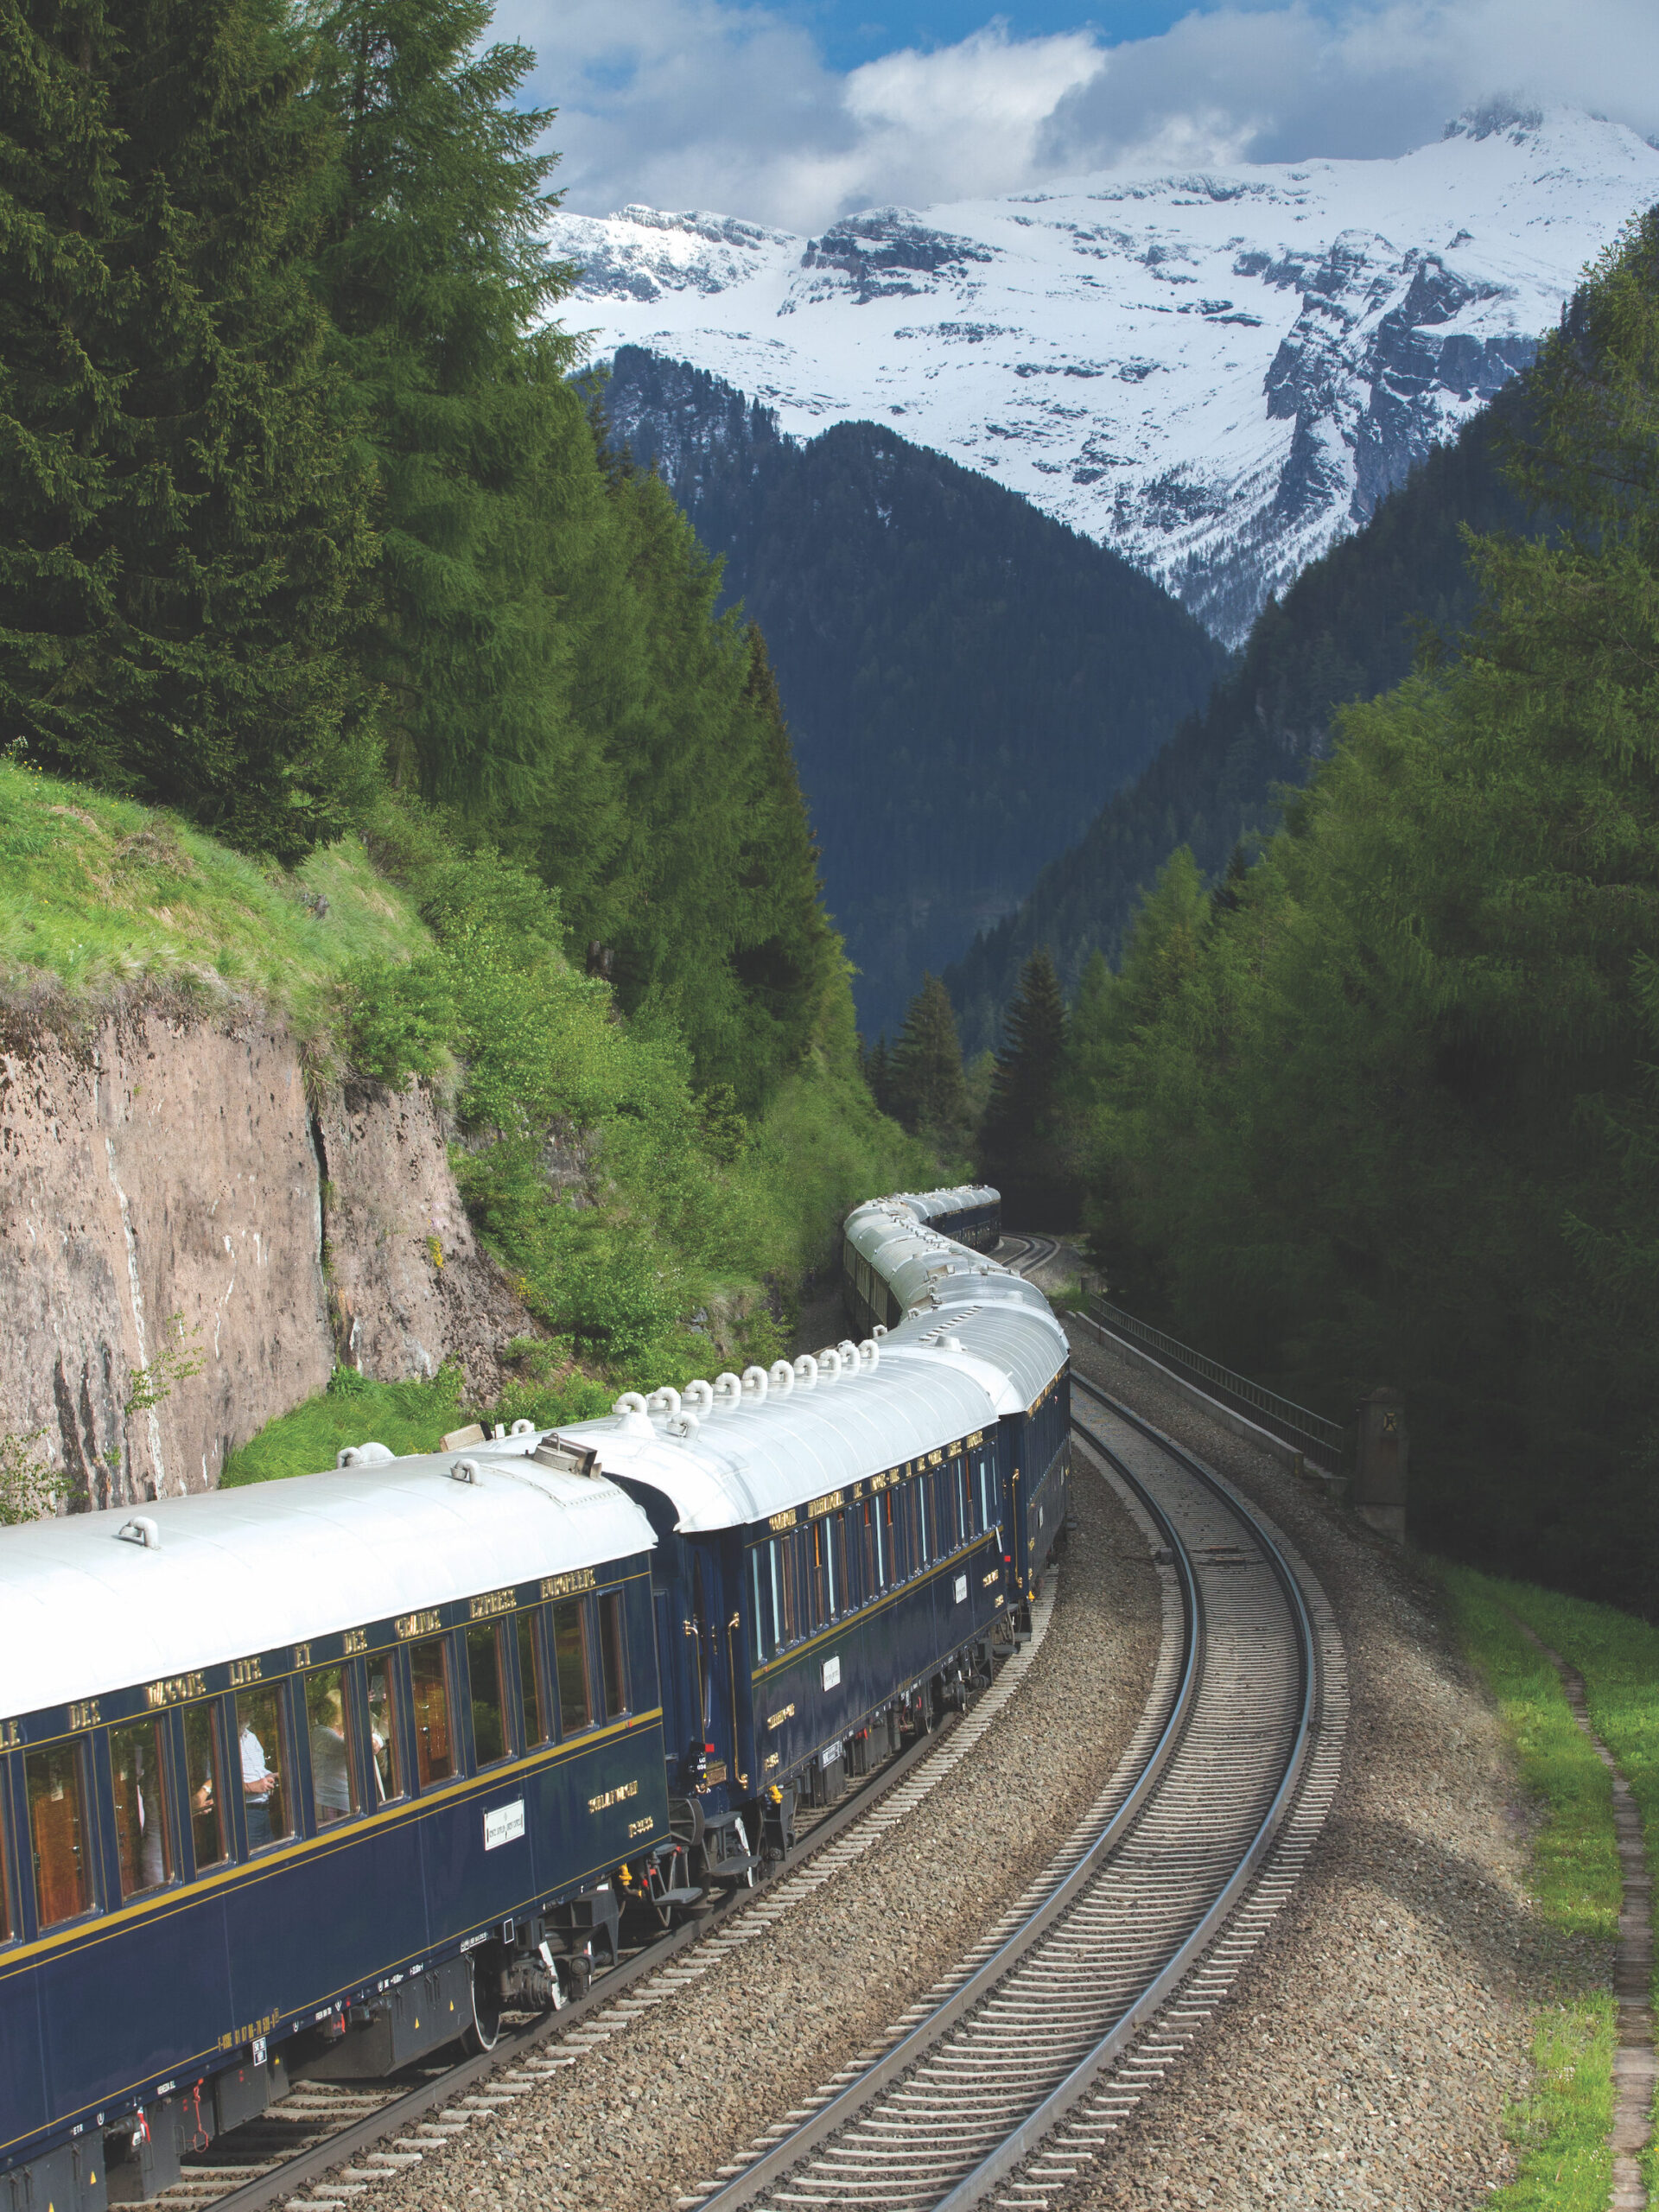 The Venice Simplon Orient Express passing through the Brenner Pass, Austria.